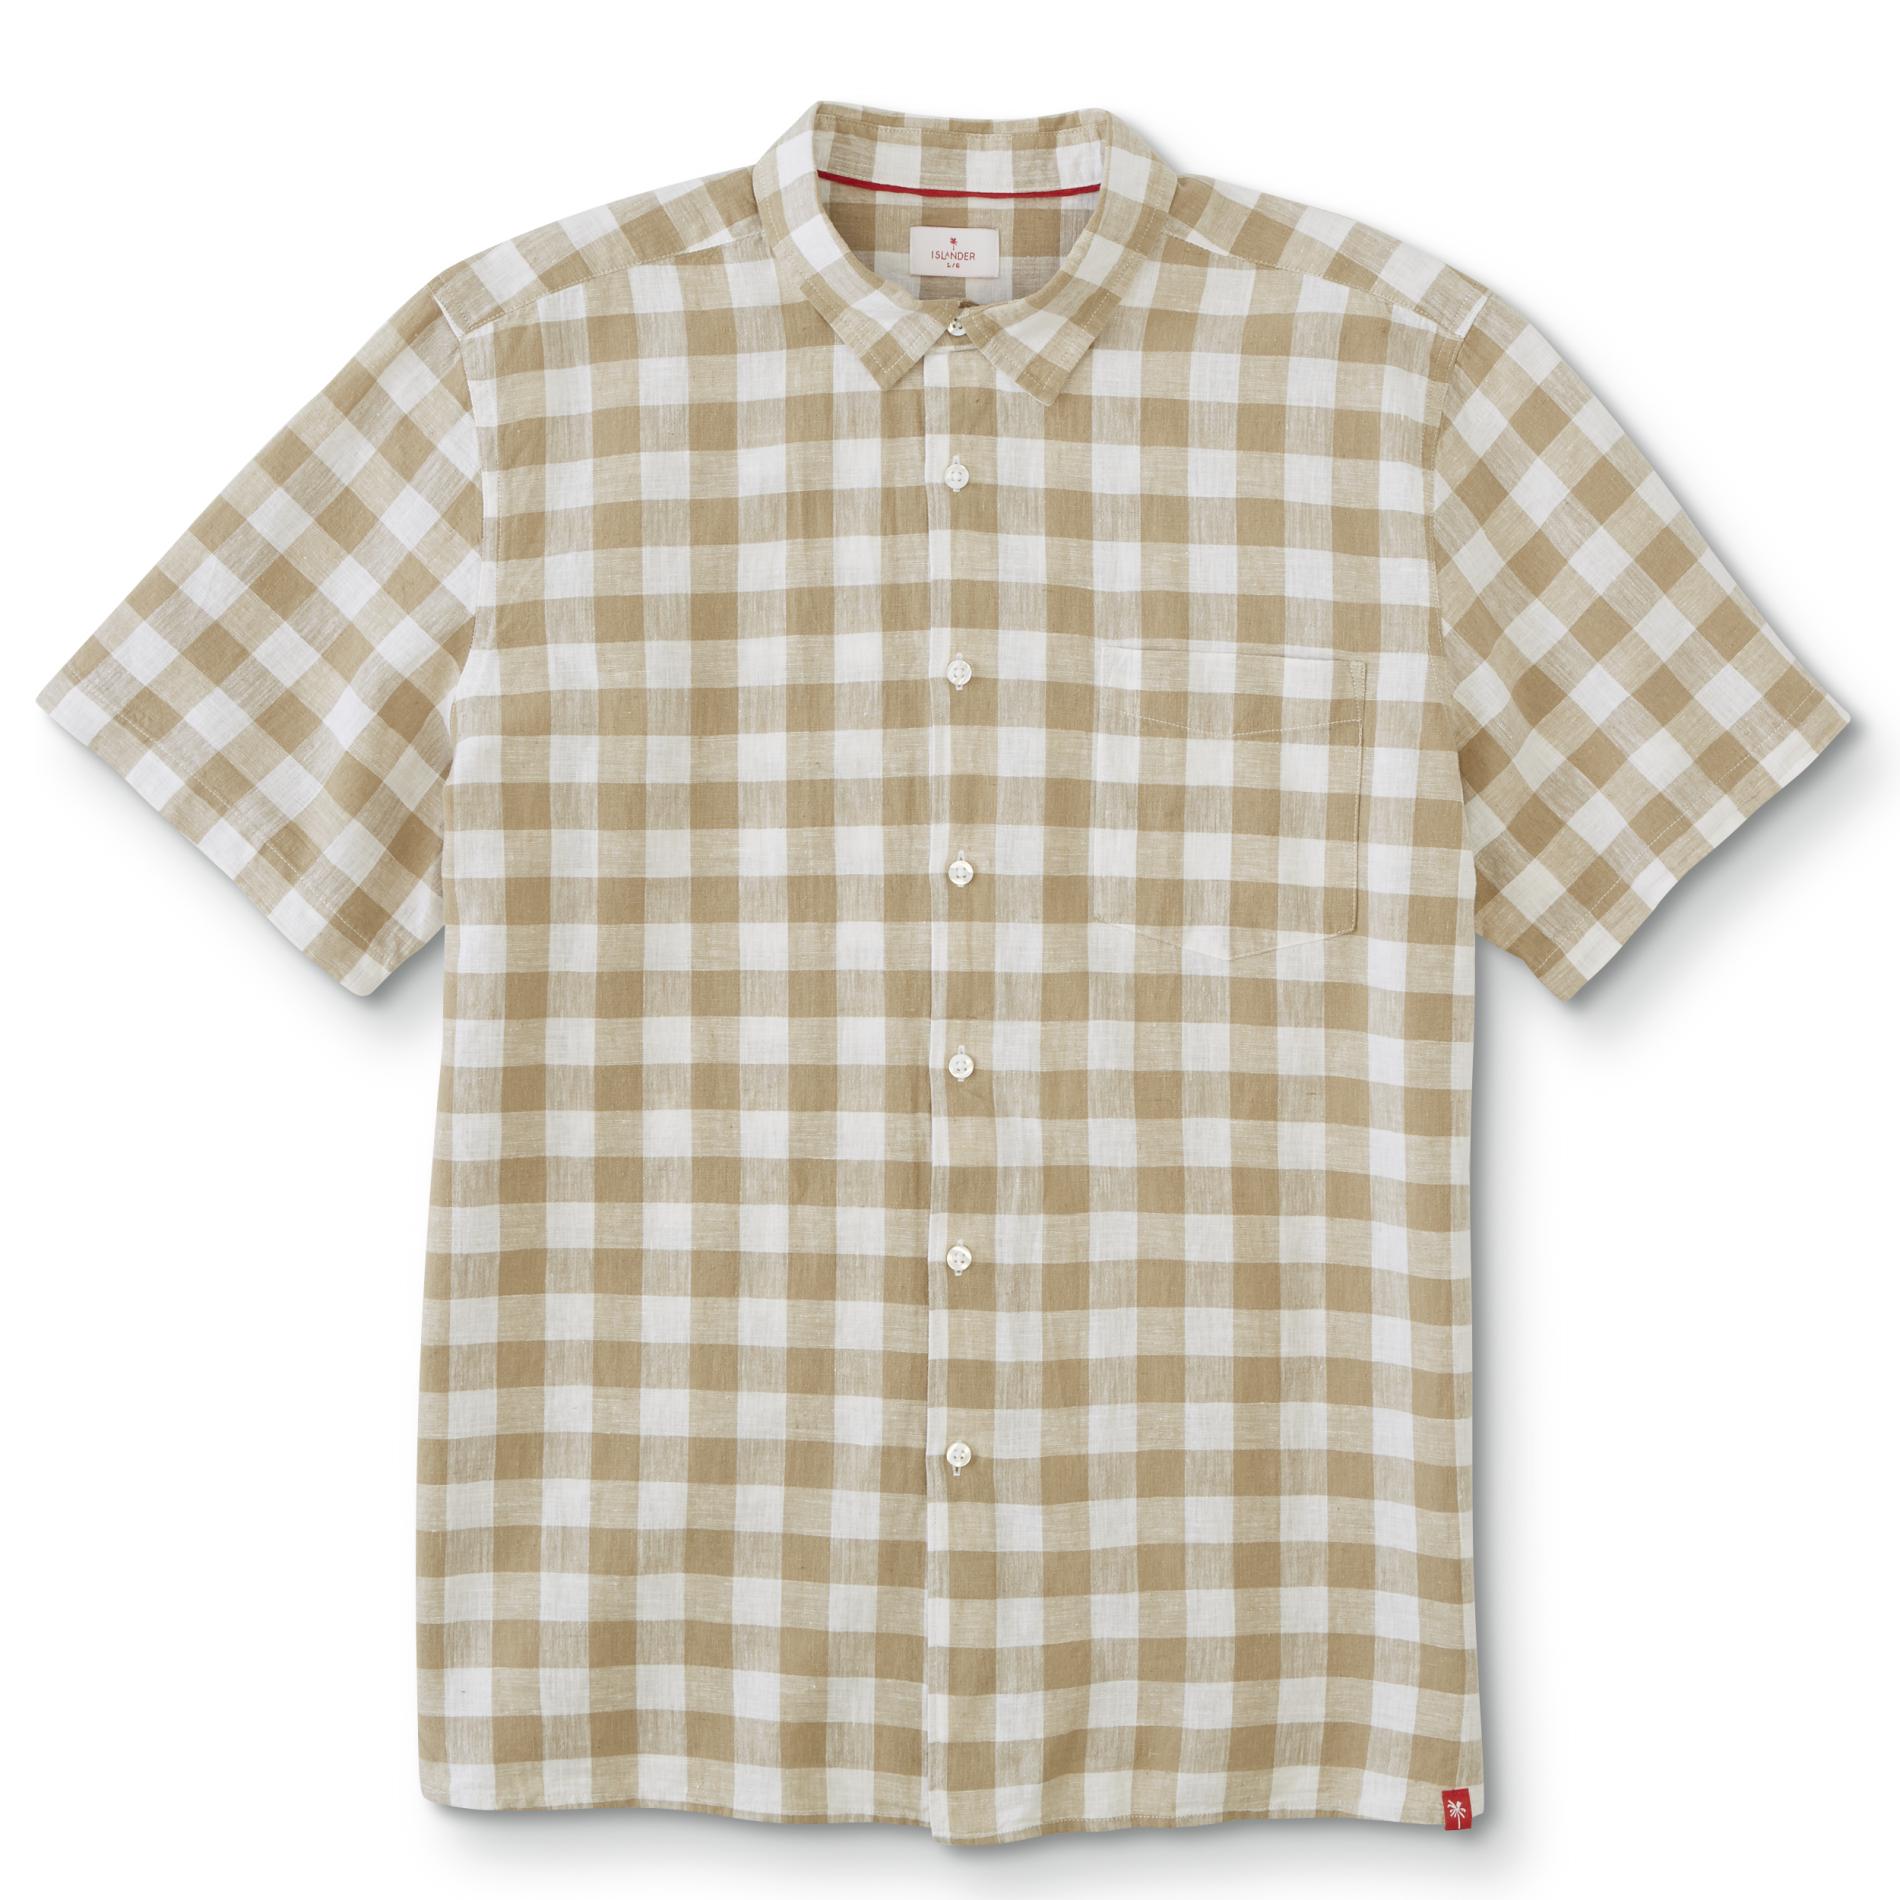 Islander Men's Short-Sleeve Linen Shirt - Checkered